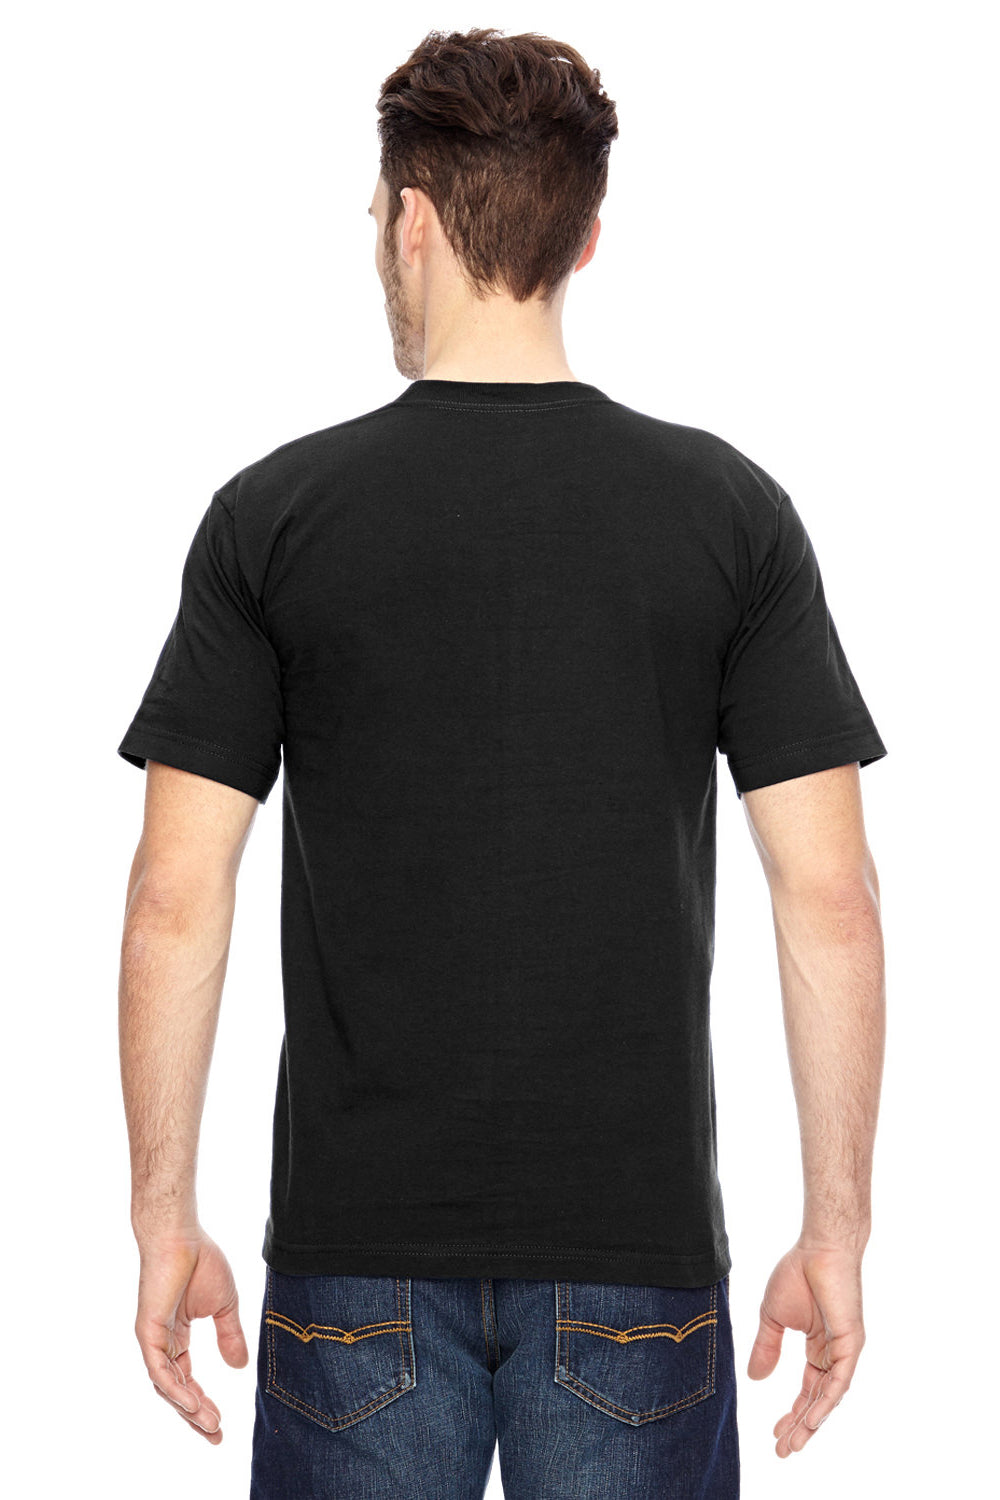 Bayside BA7100 Mens USA Made Short Sleeve Crewneck T-Shirt w/ Pocket Black Model Back